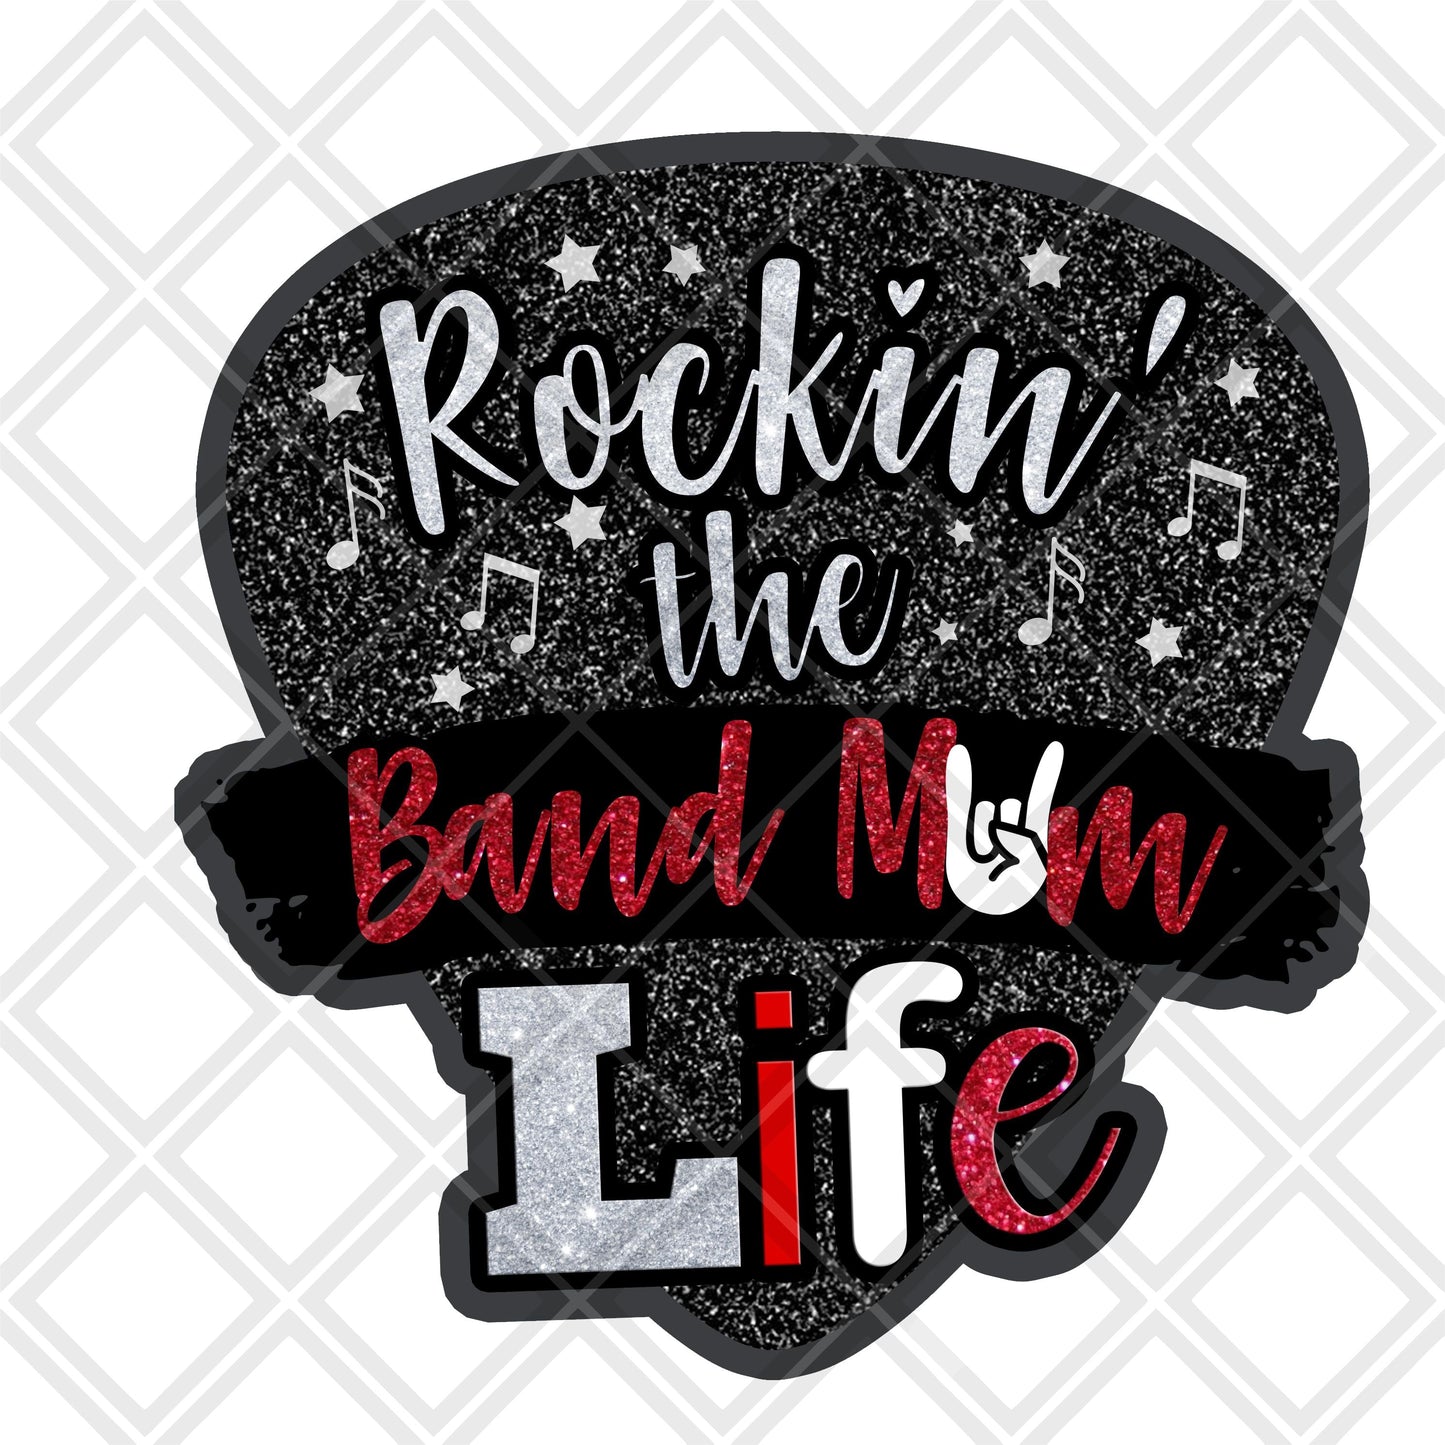 Rockin the band mom life DTF TRANSFERPRINT TO ORDER